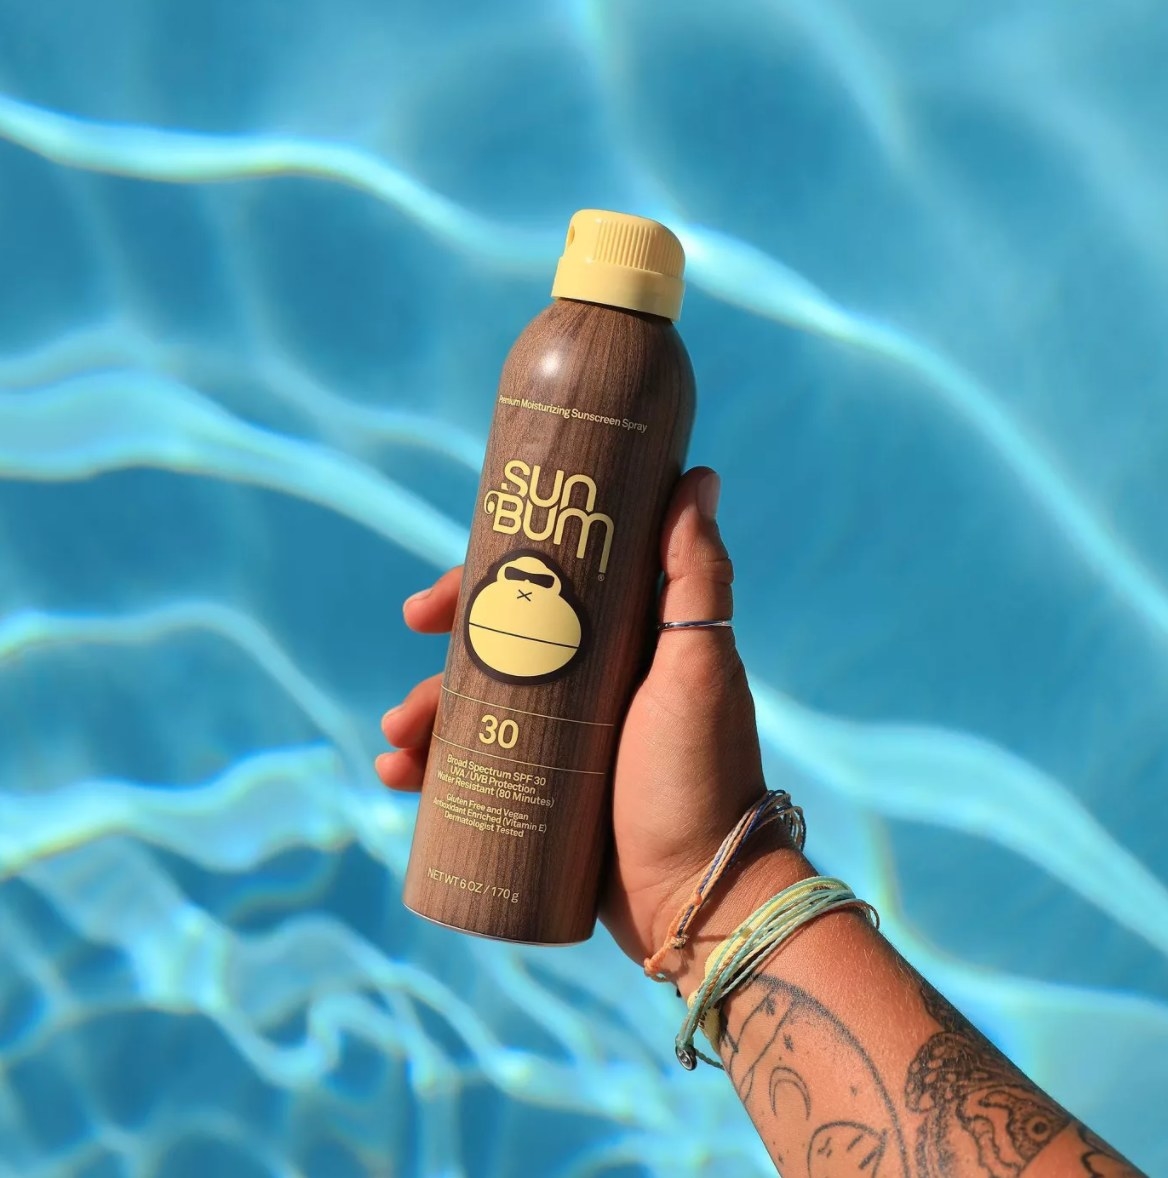 tattooed arm holding Sun Bum sunscreen over pool 